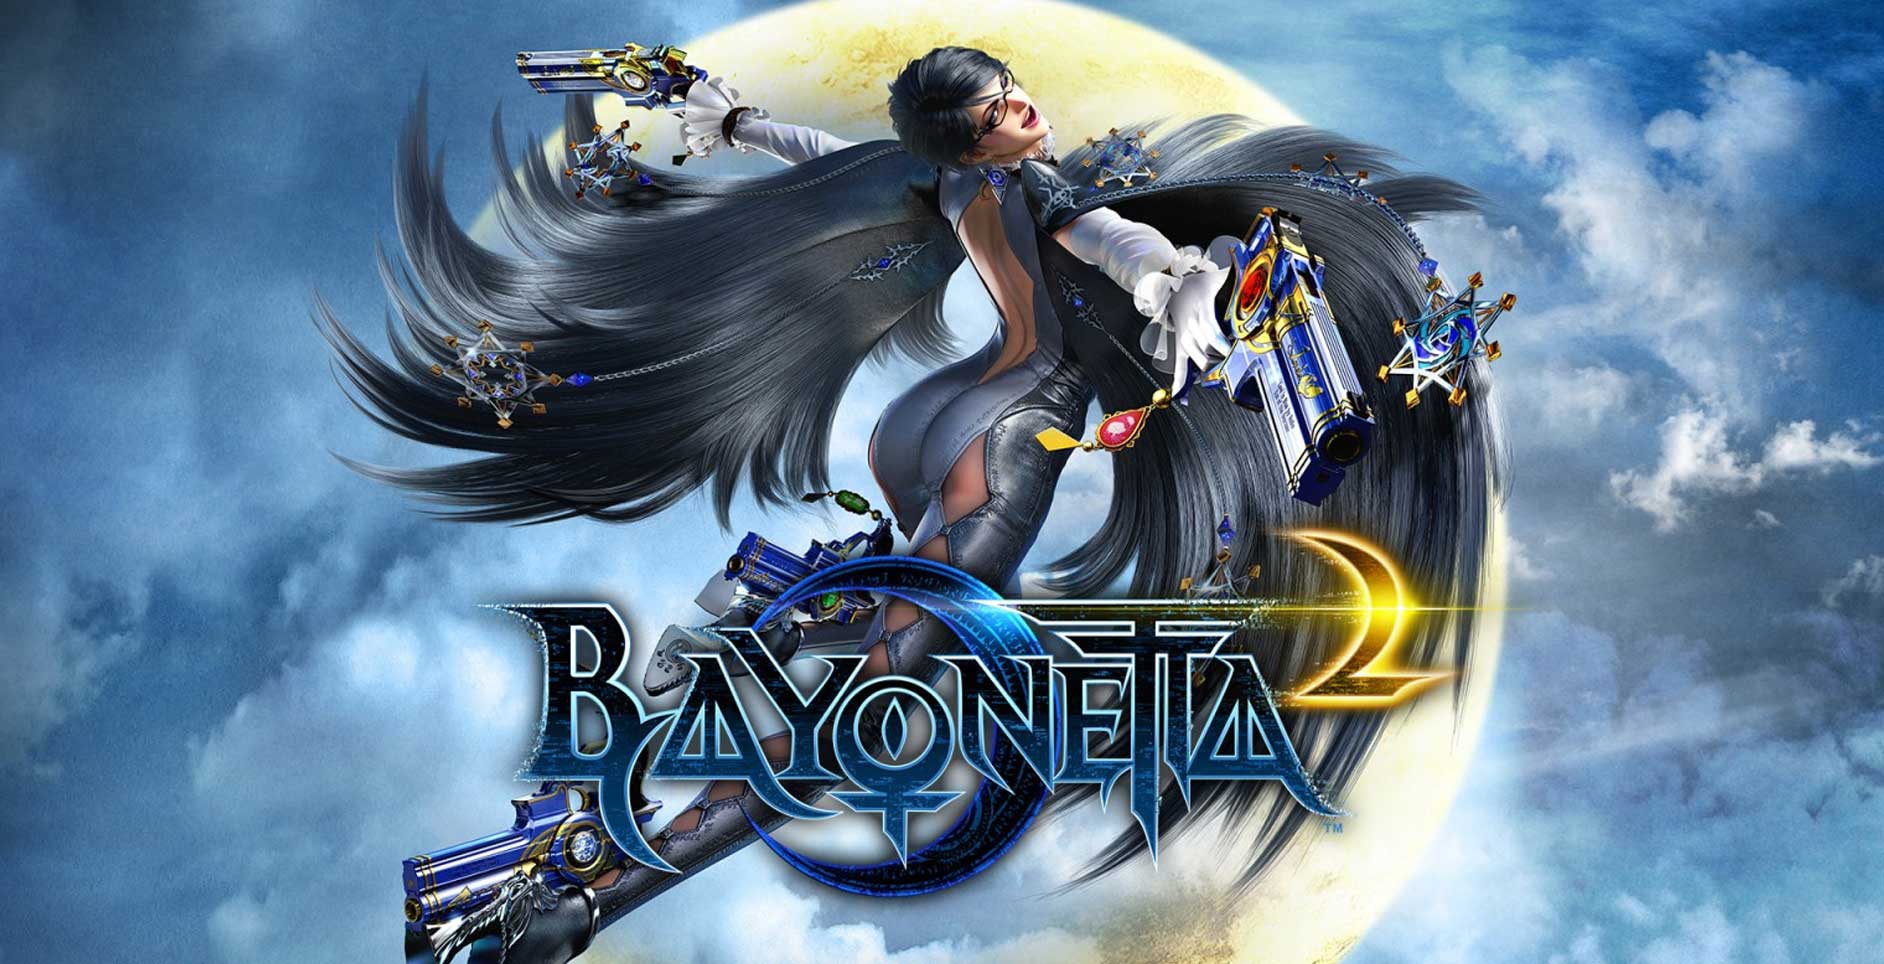 [Recenzja] Bayonetta 2 – The shadow remains cast!